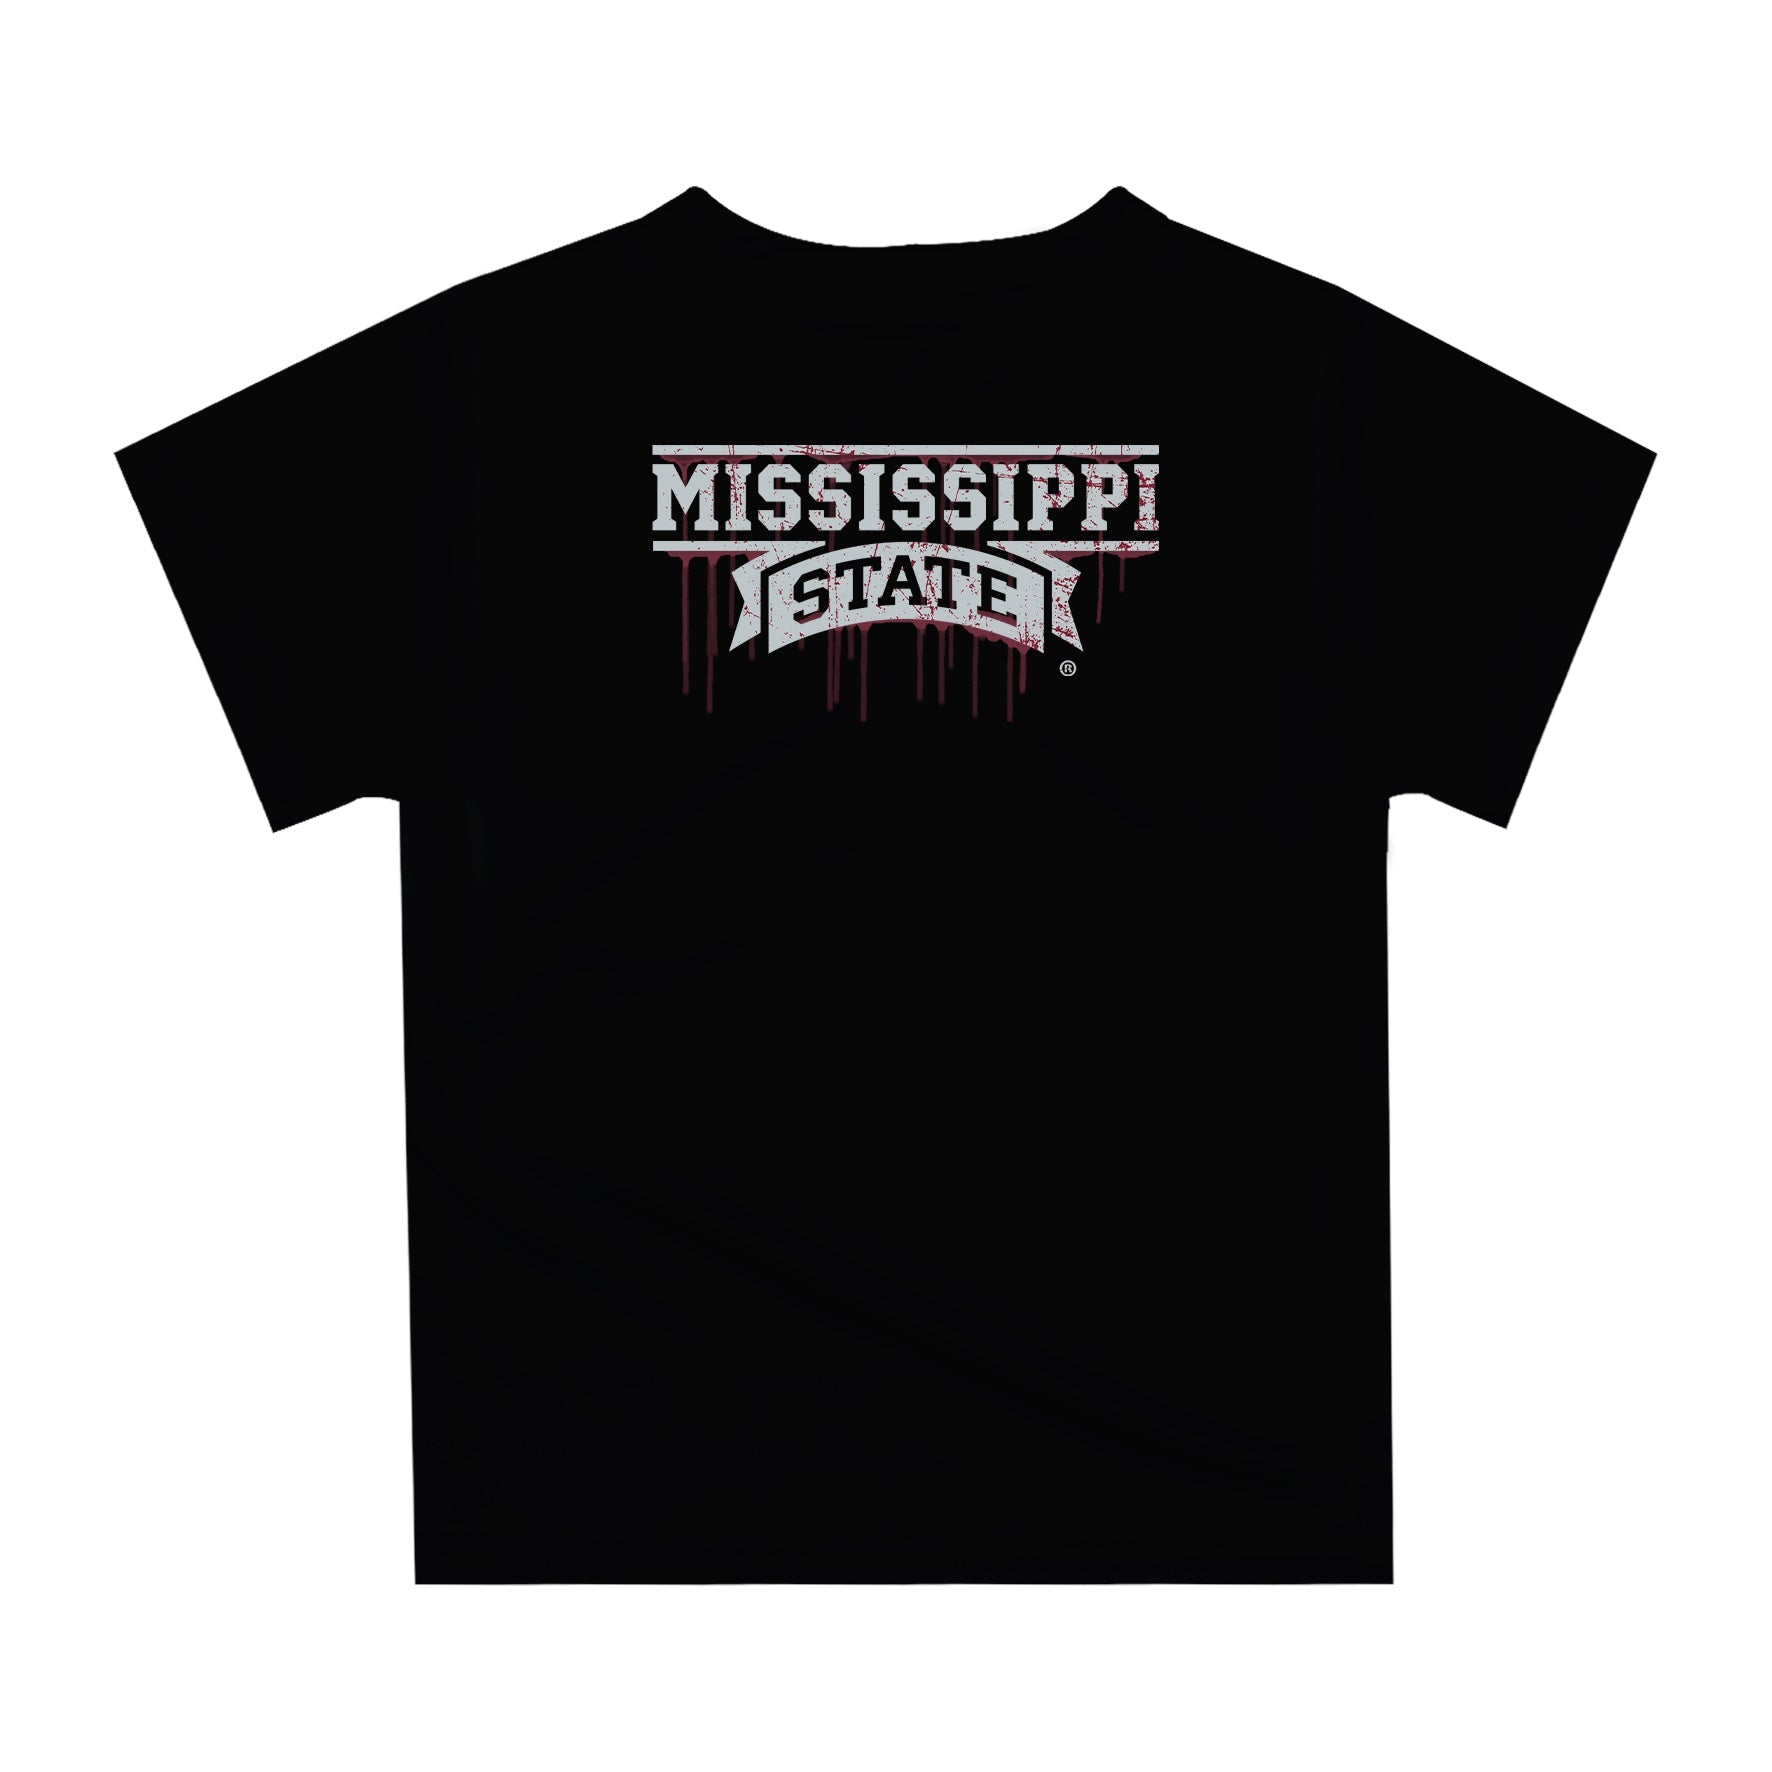 Mississippi State Bulldogs Original Dripping Football Helmet Black T-Shirt by Vive La Fete